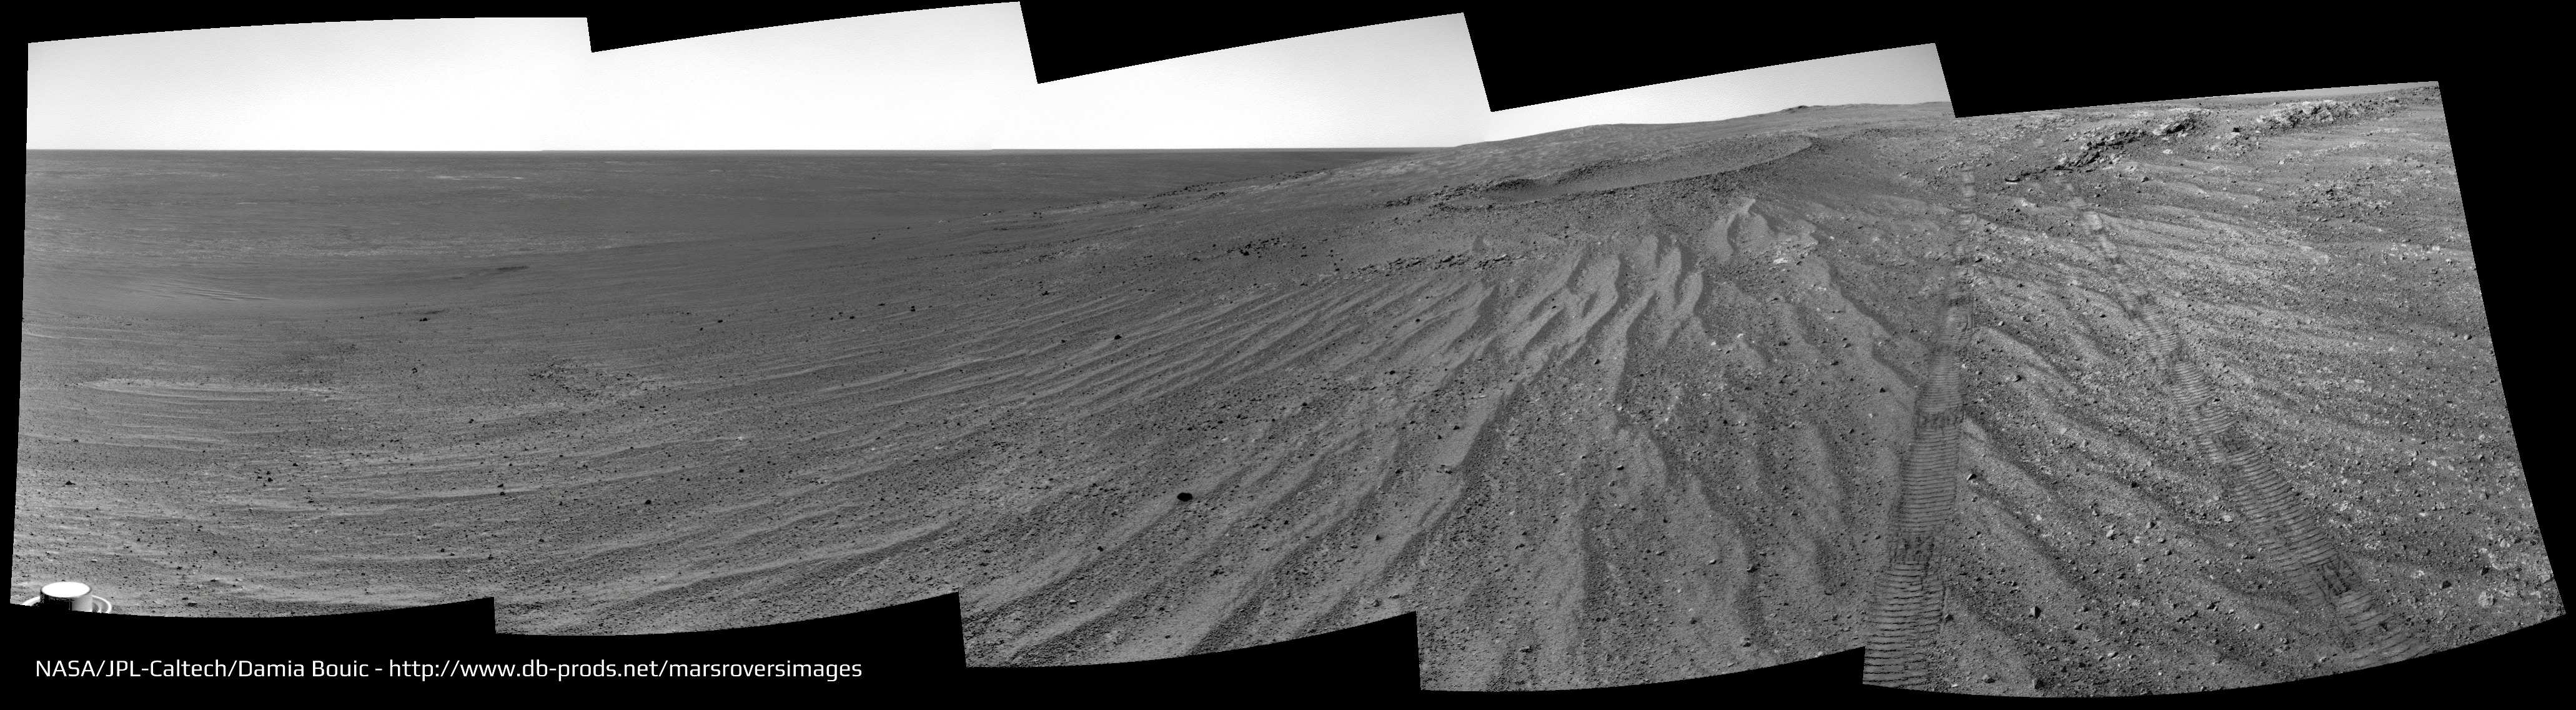 MARS: S putovanja rovera OPPORTUNITY  Sol3649_pano